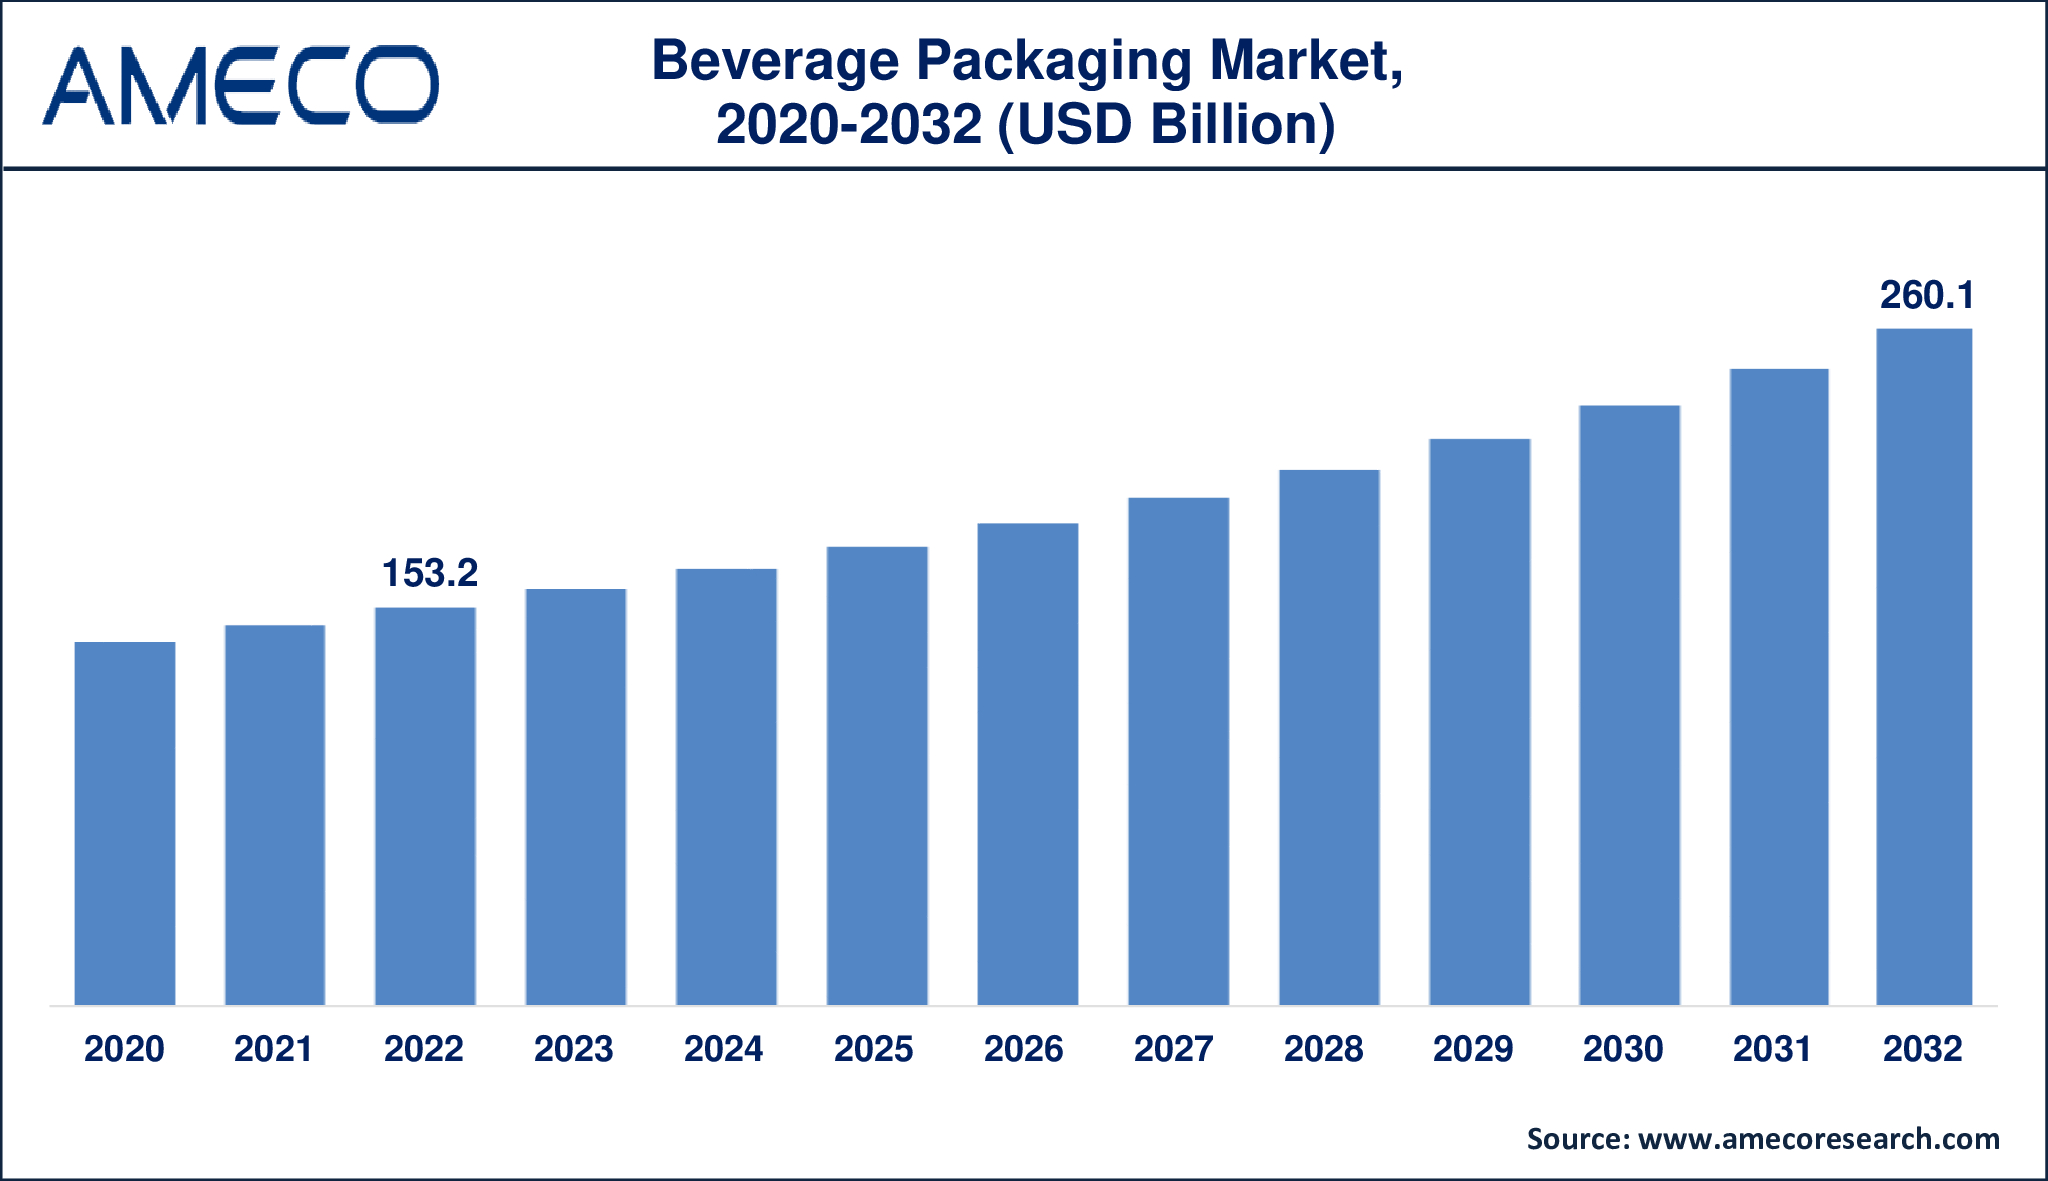 Beverage Packaging Market Dynamics